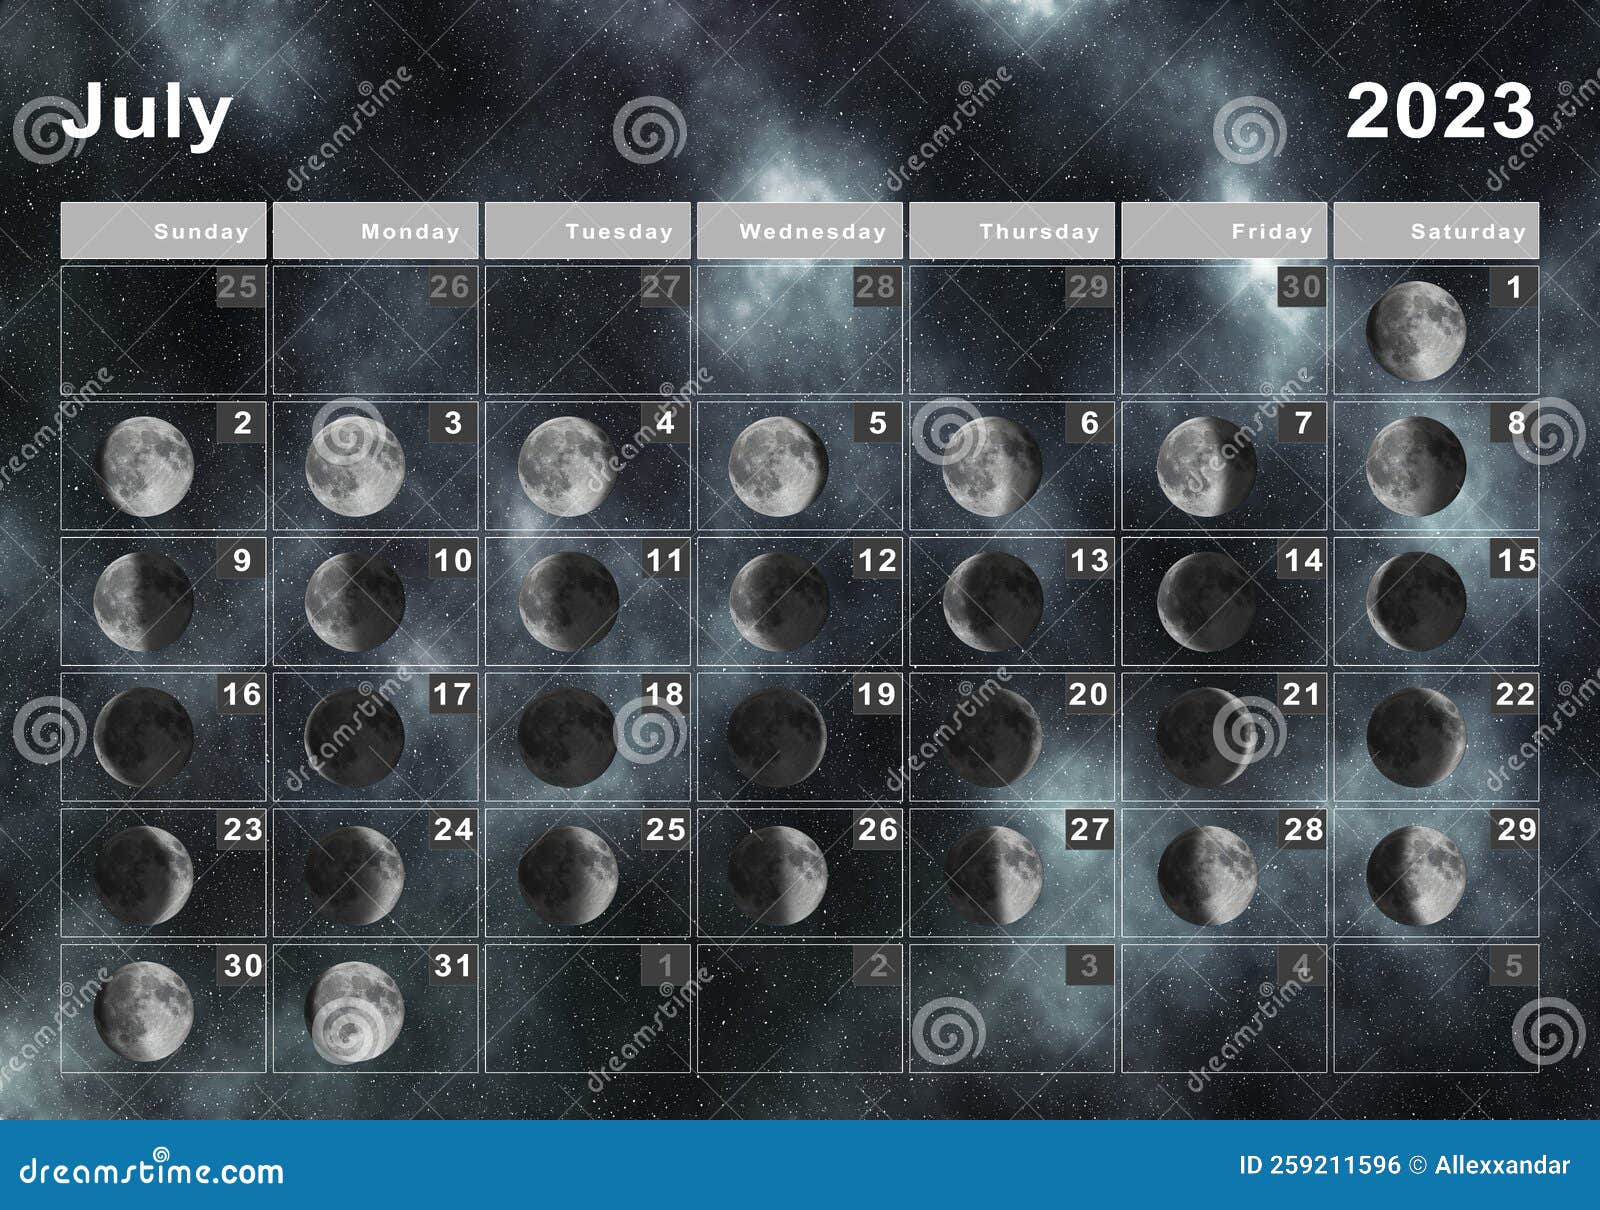 July 2023 Lunar Calendar, Moon Cycles Stock Illustration - Illustration ...